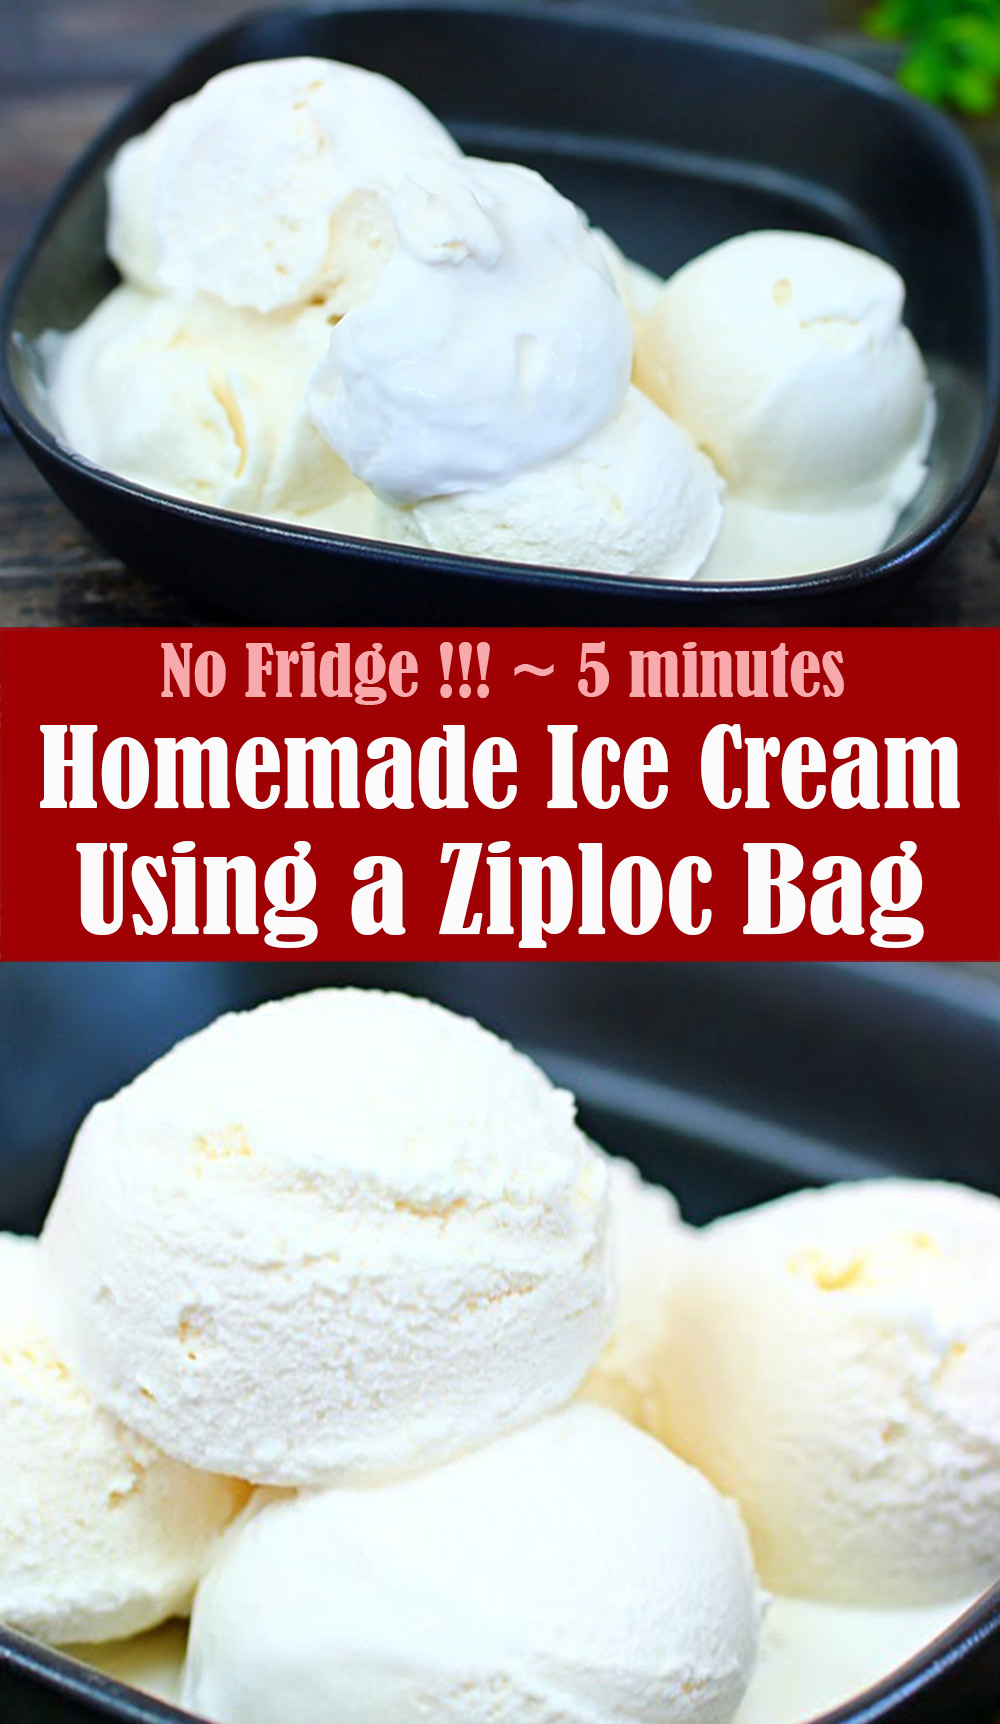 No Fridge Homemade Ice Cream in 5 Minutes